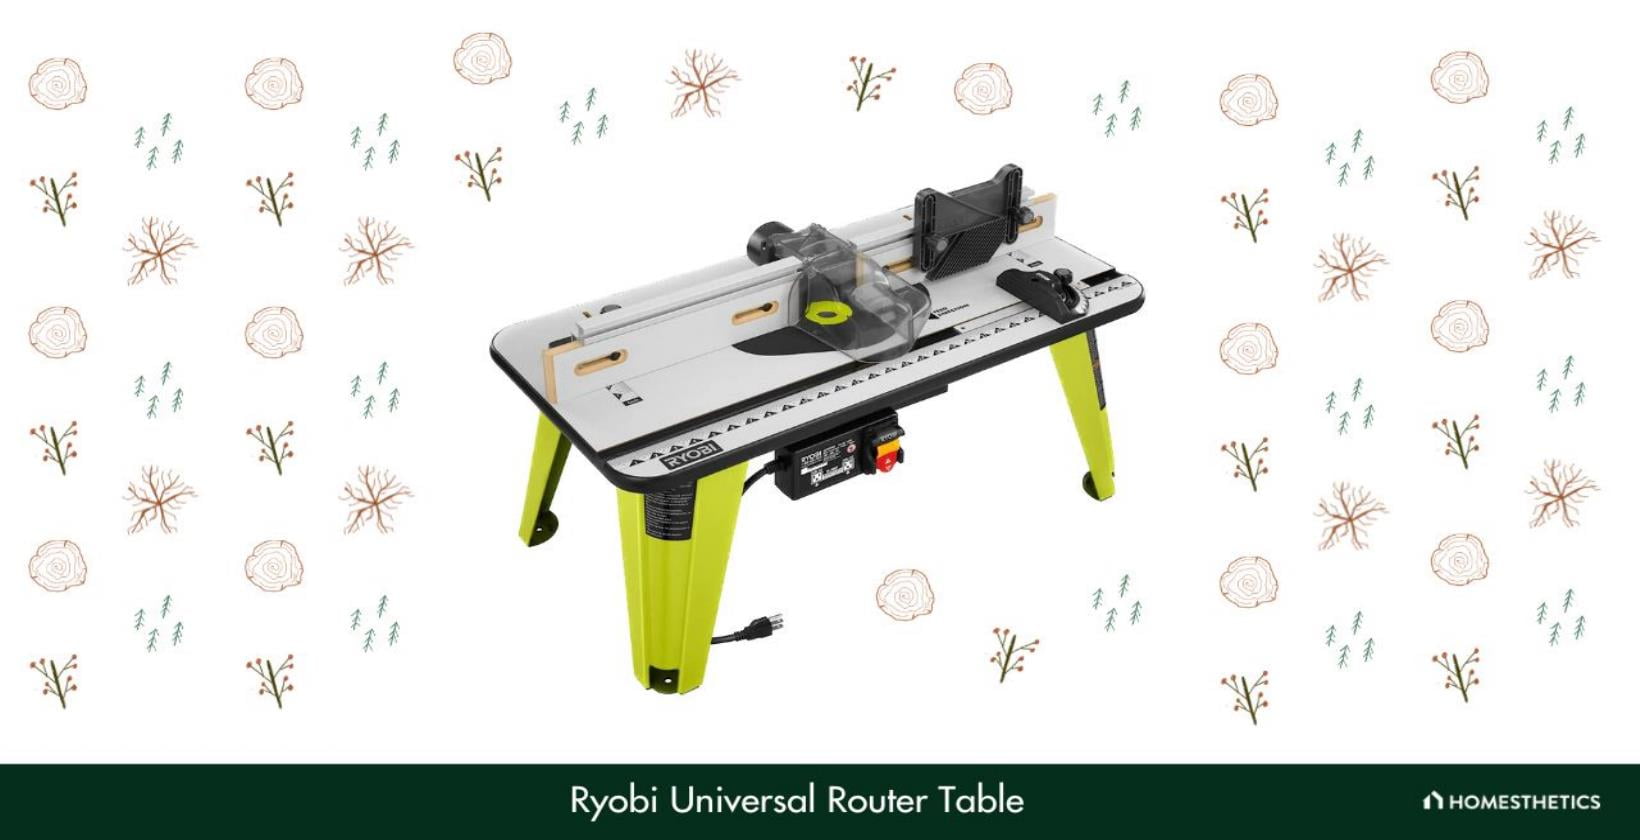 5. Ryobi Universal Router Table